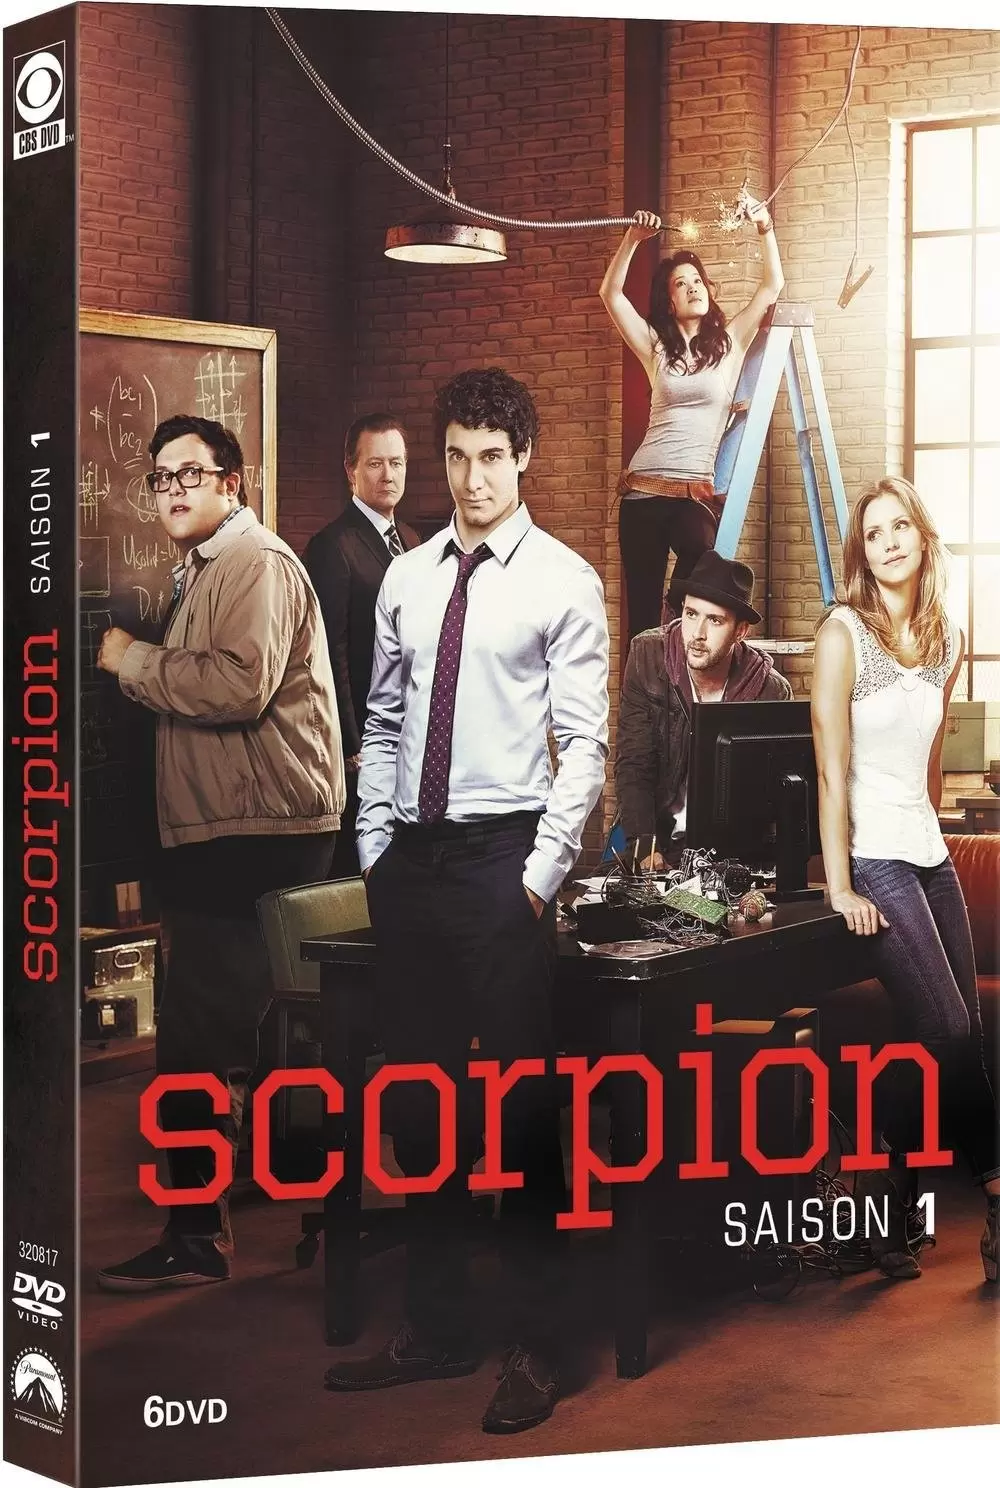 Scorpion - Scorpion - Saison 1